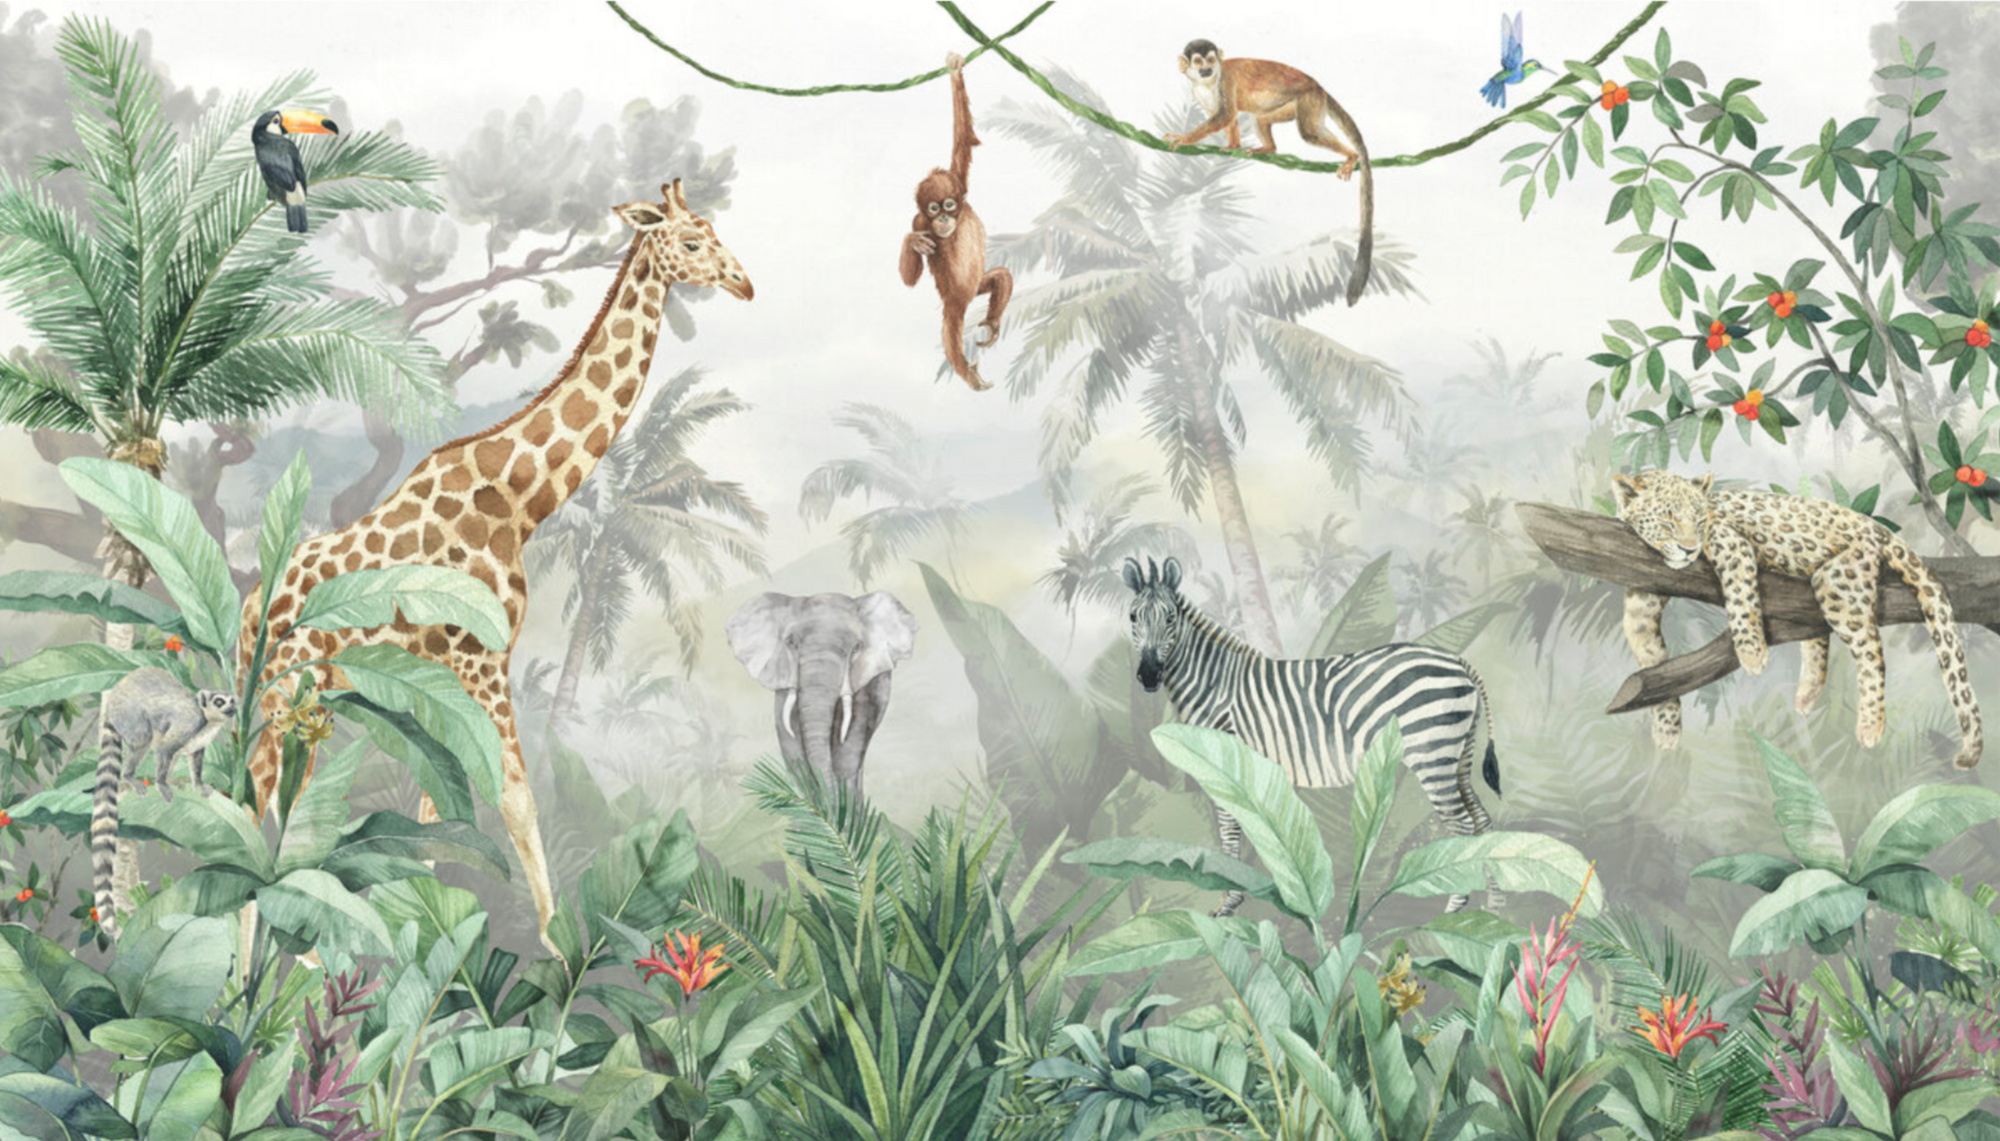 Jungle theme wallpaper mural toucan giraffe monkey zebra leopard